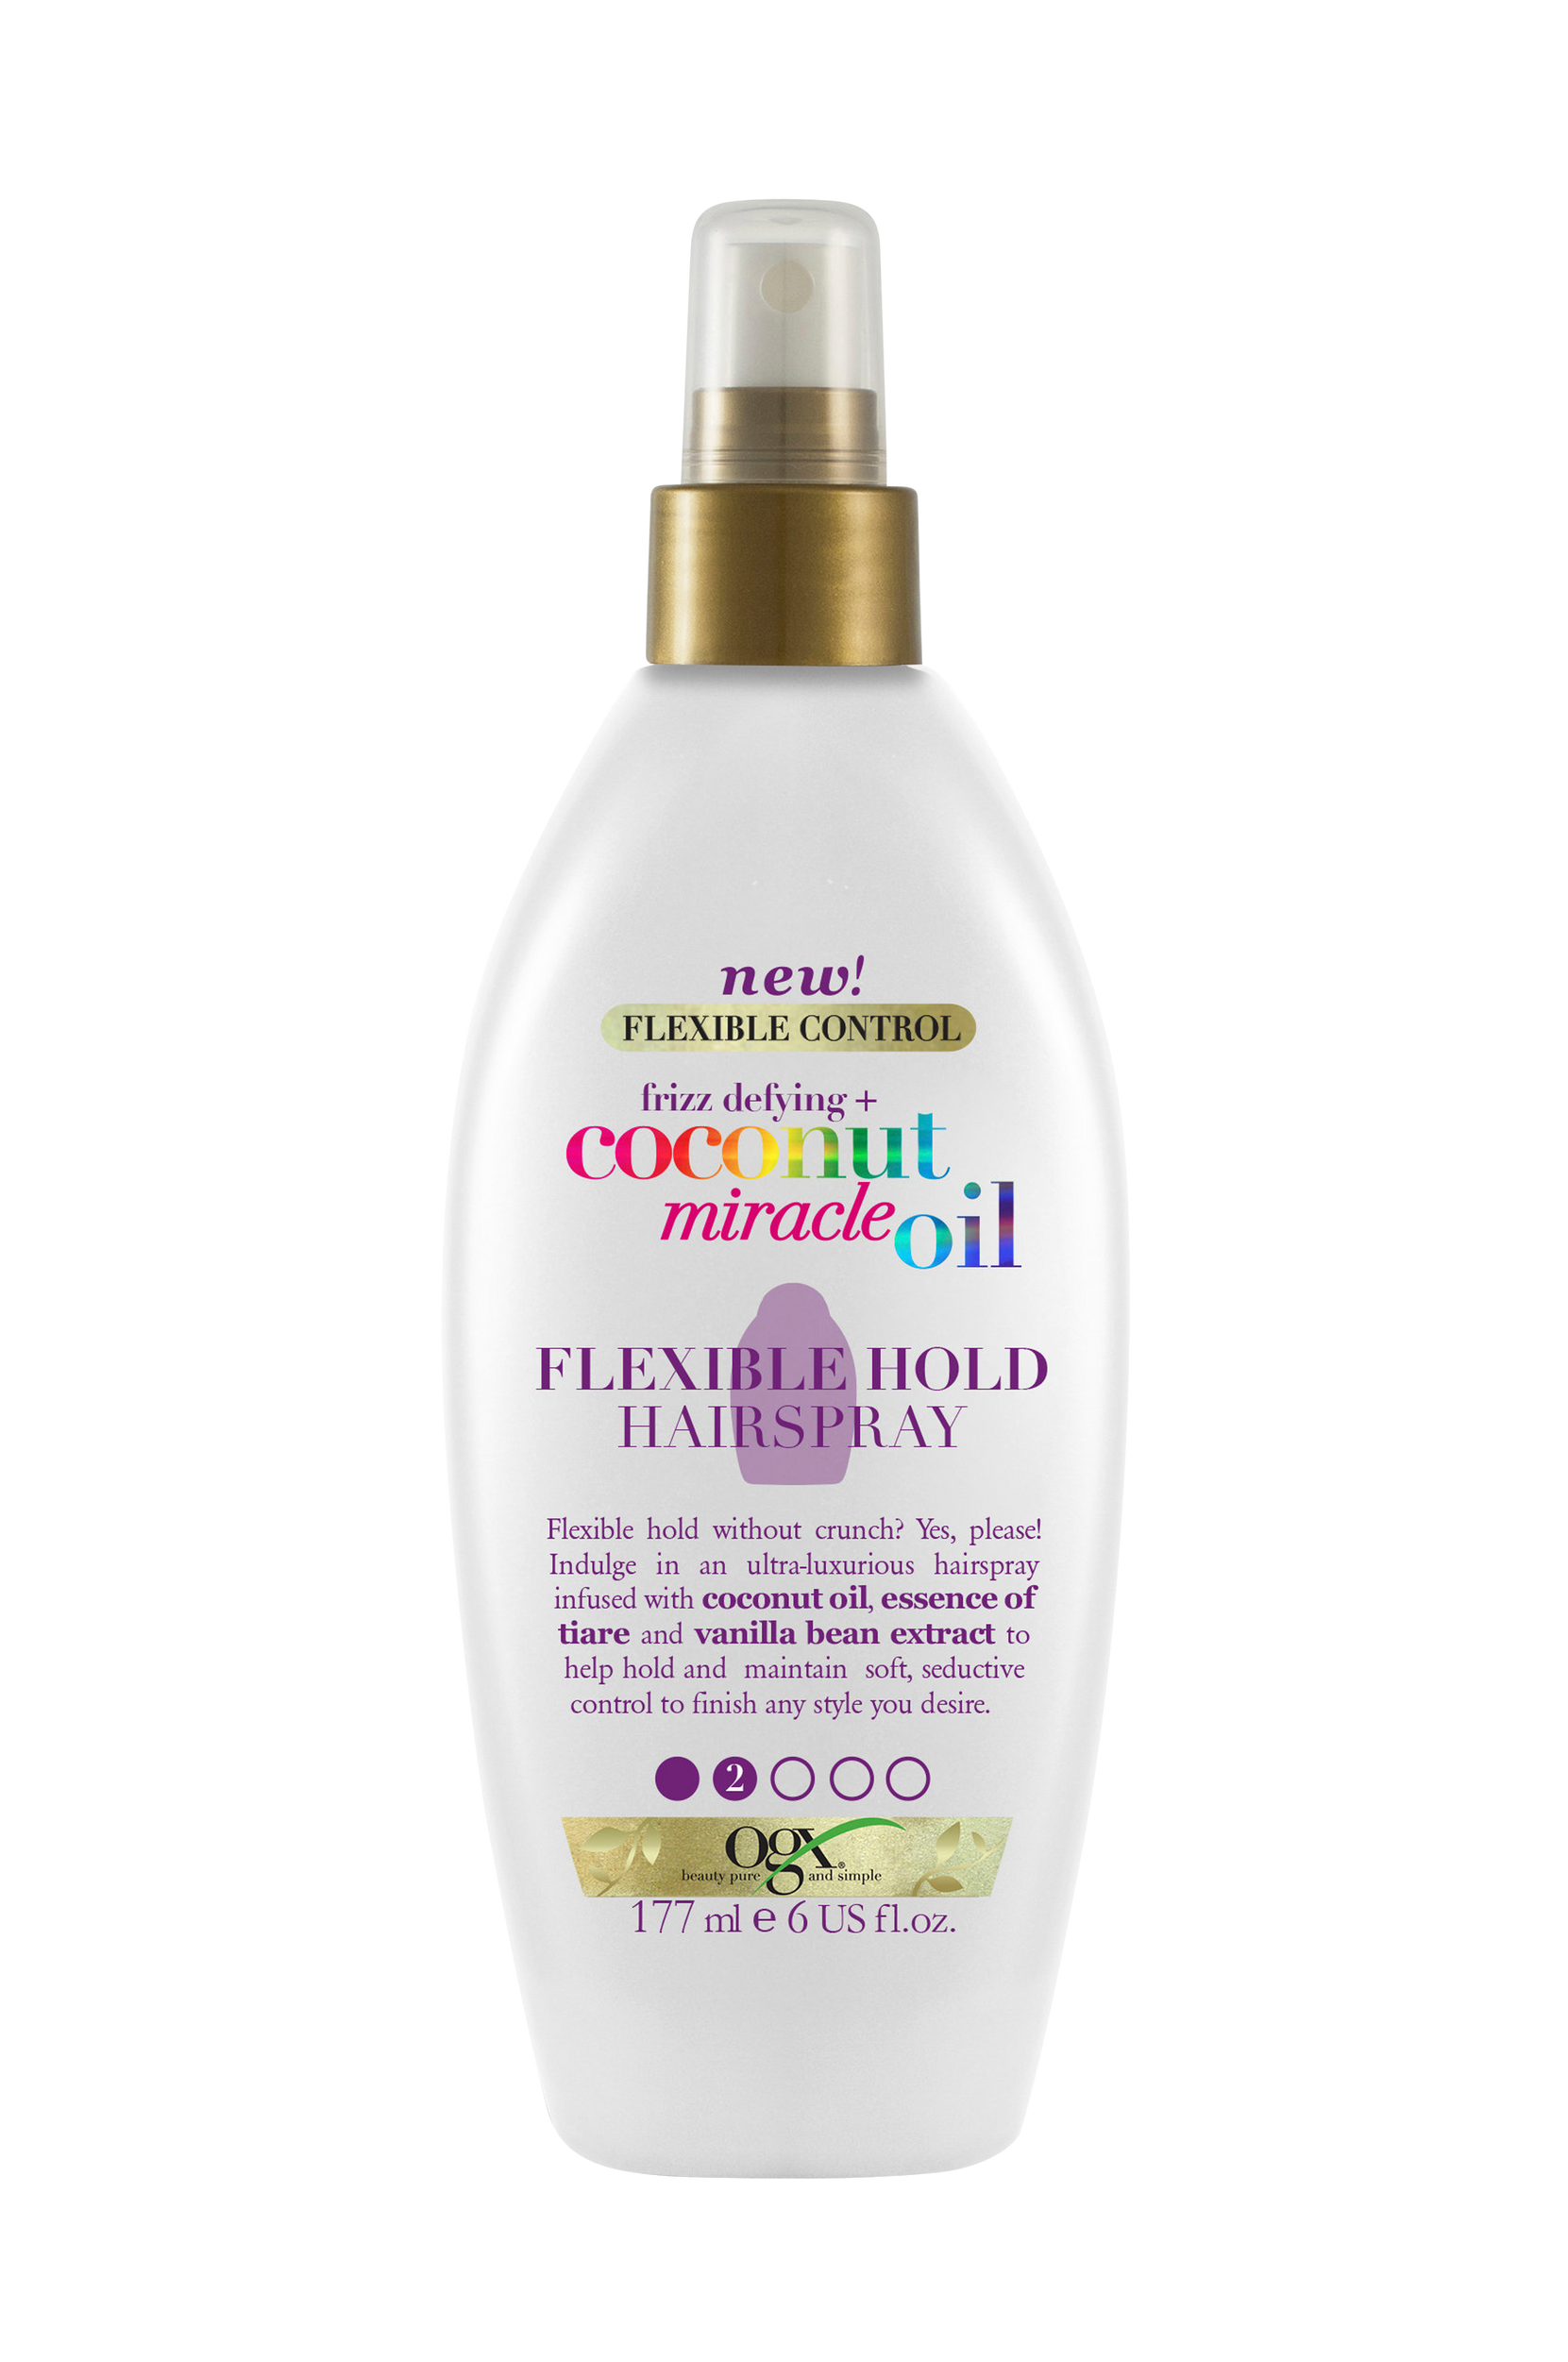 Ogx - Coconut Miracle Flexible Hold Hair Spray 177 ml